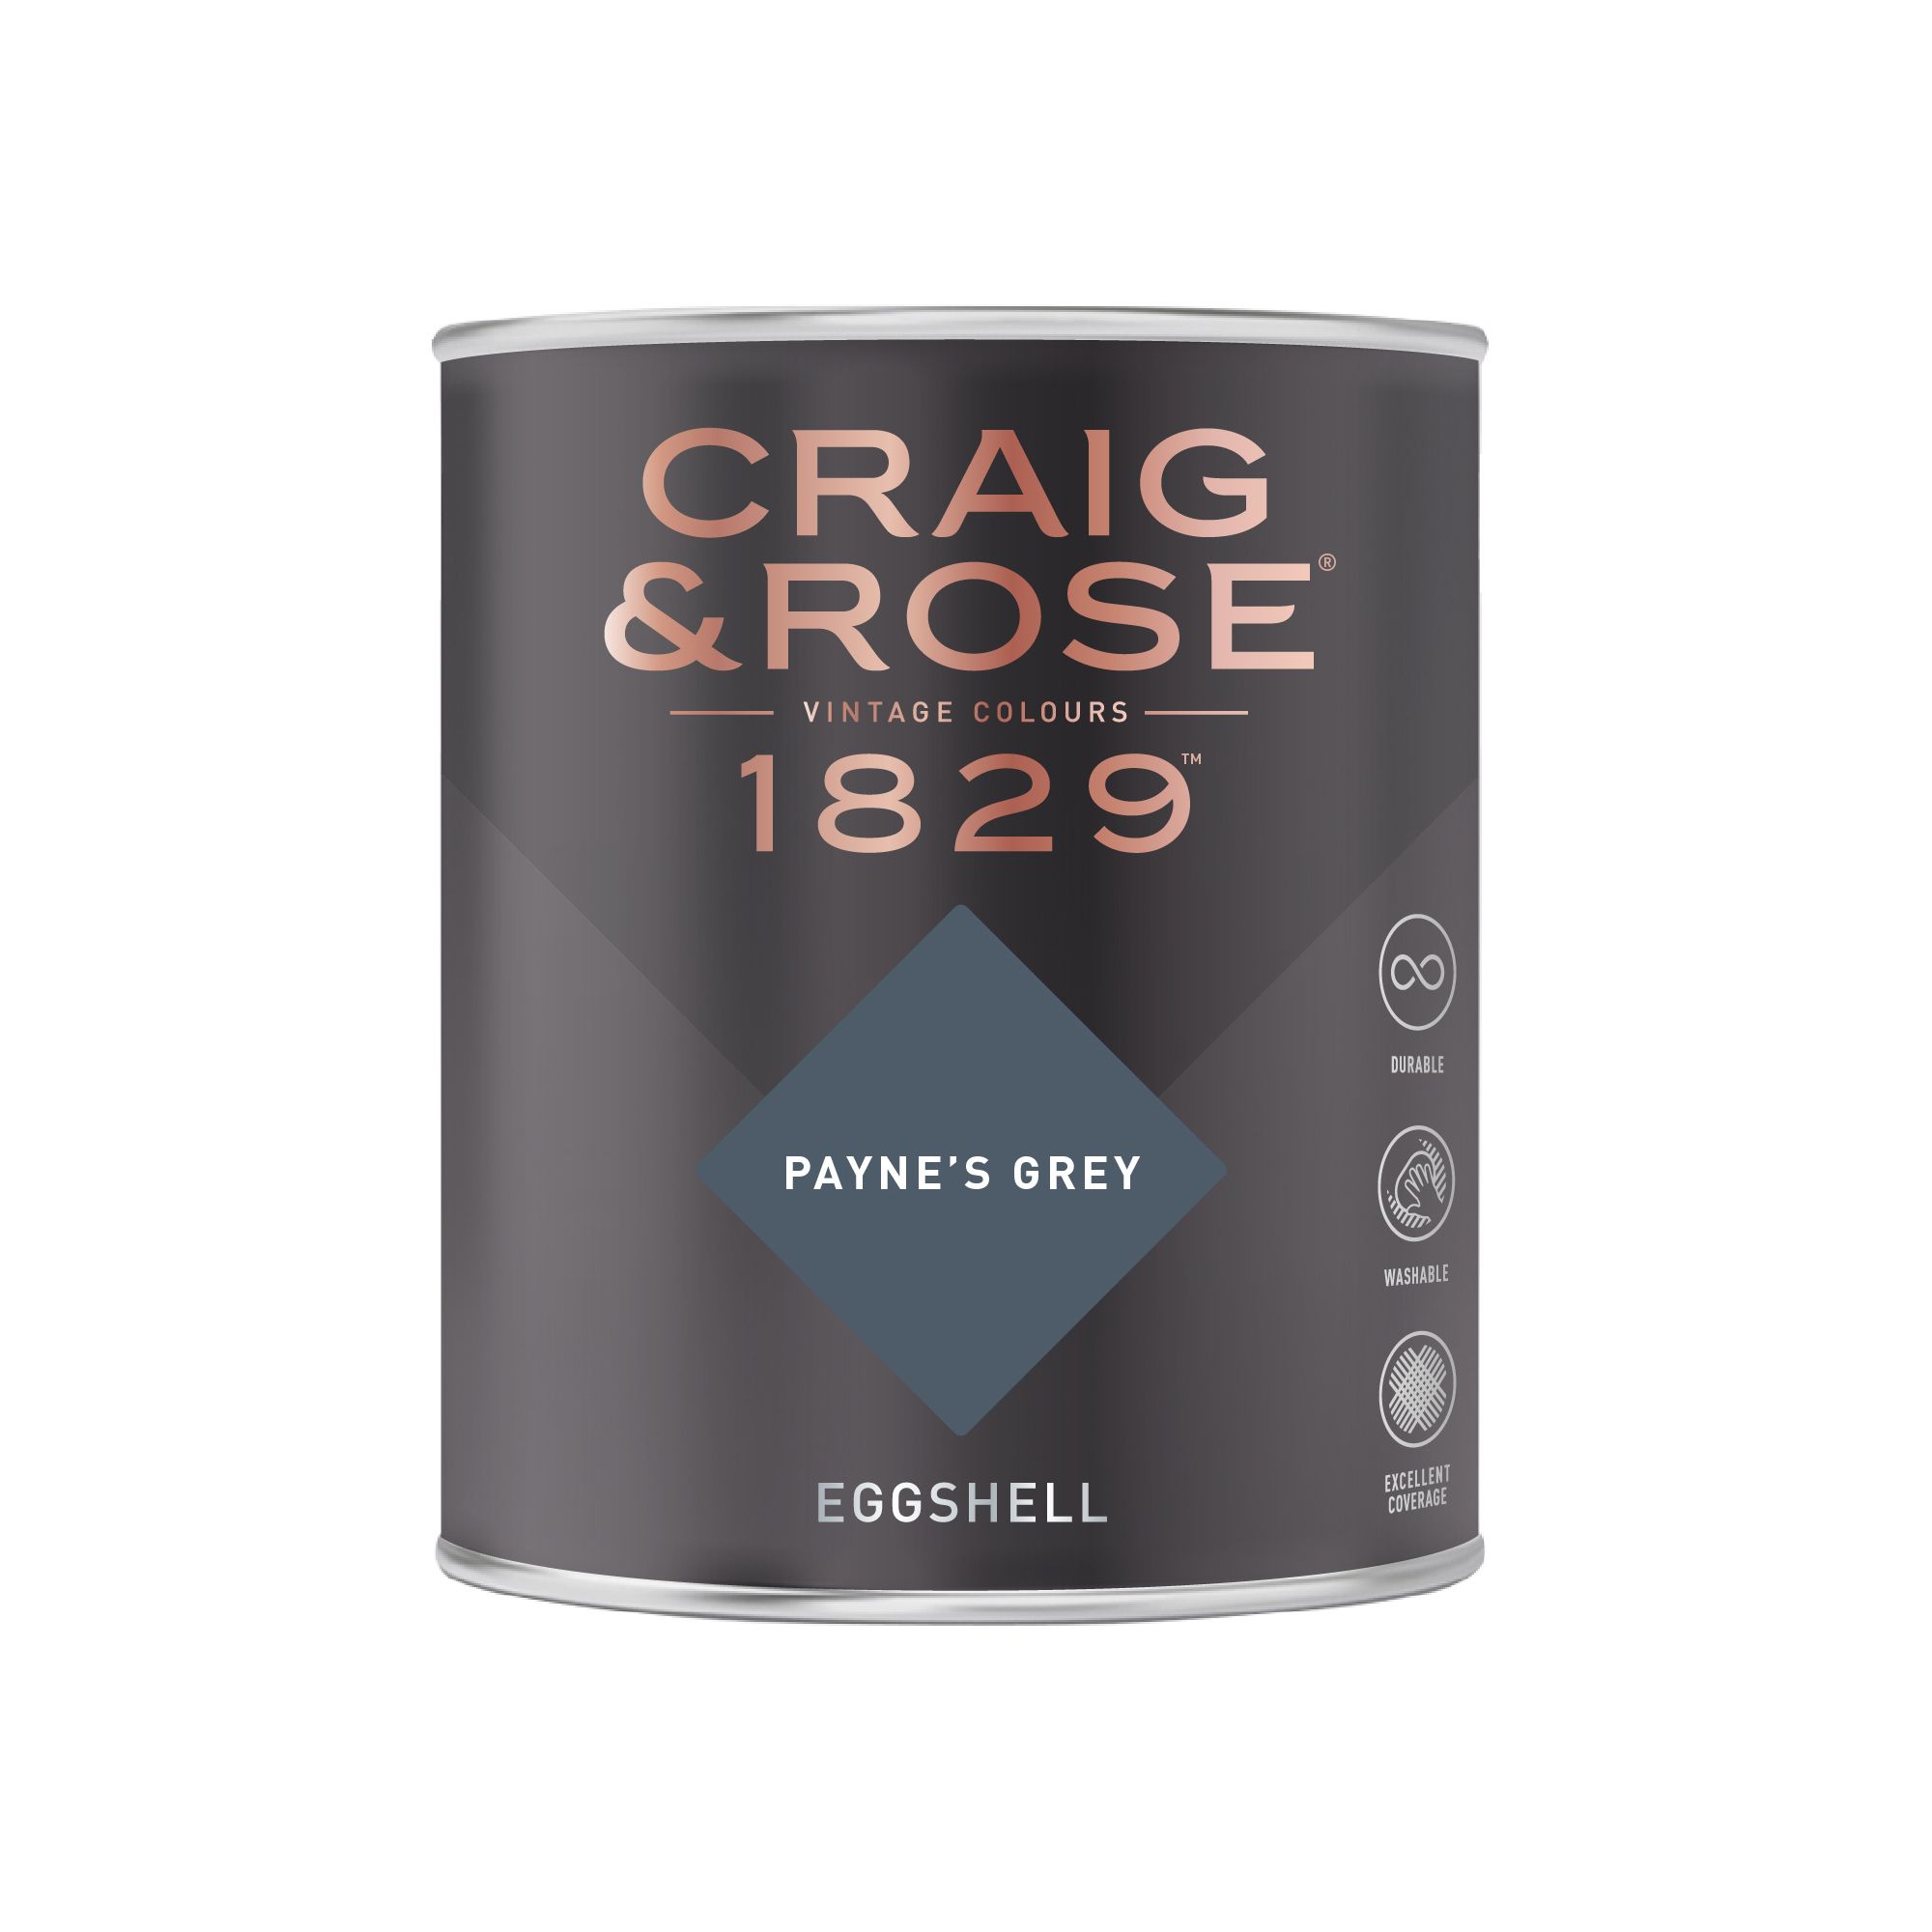 Craig & Rose 1829 Payne's Grey Eggshell Wall paint, 750ml